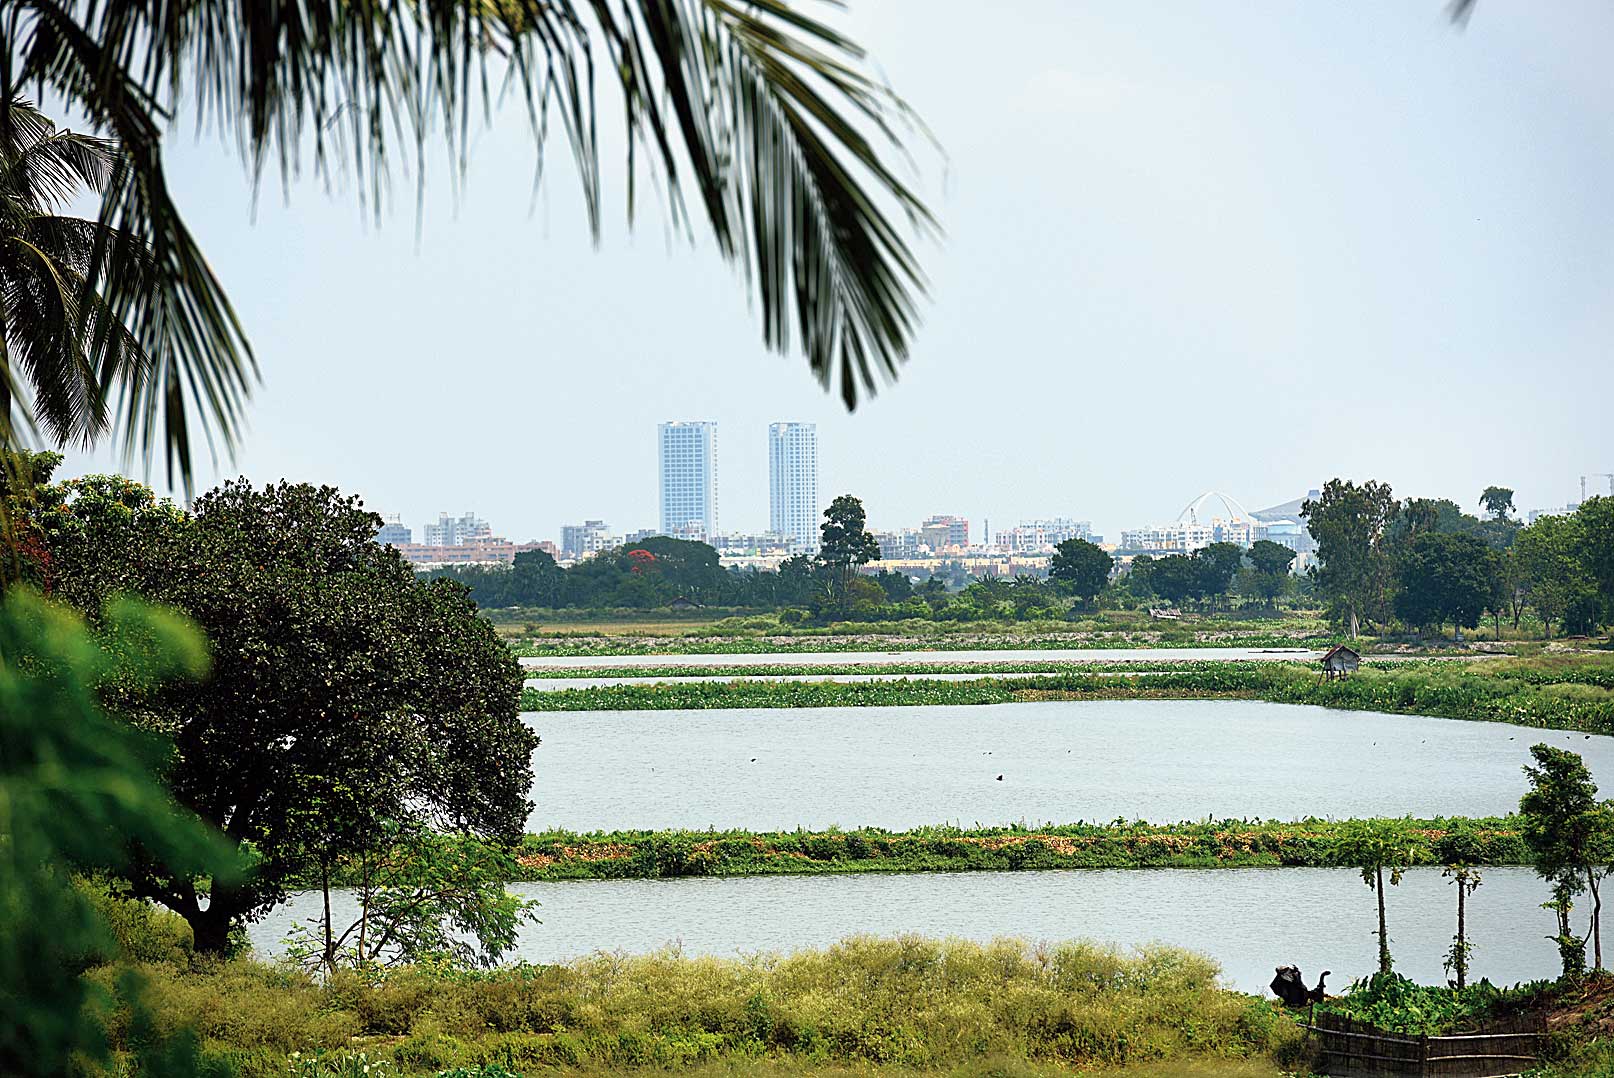 The East Calcutta Wetlands
